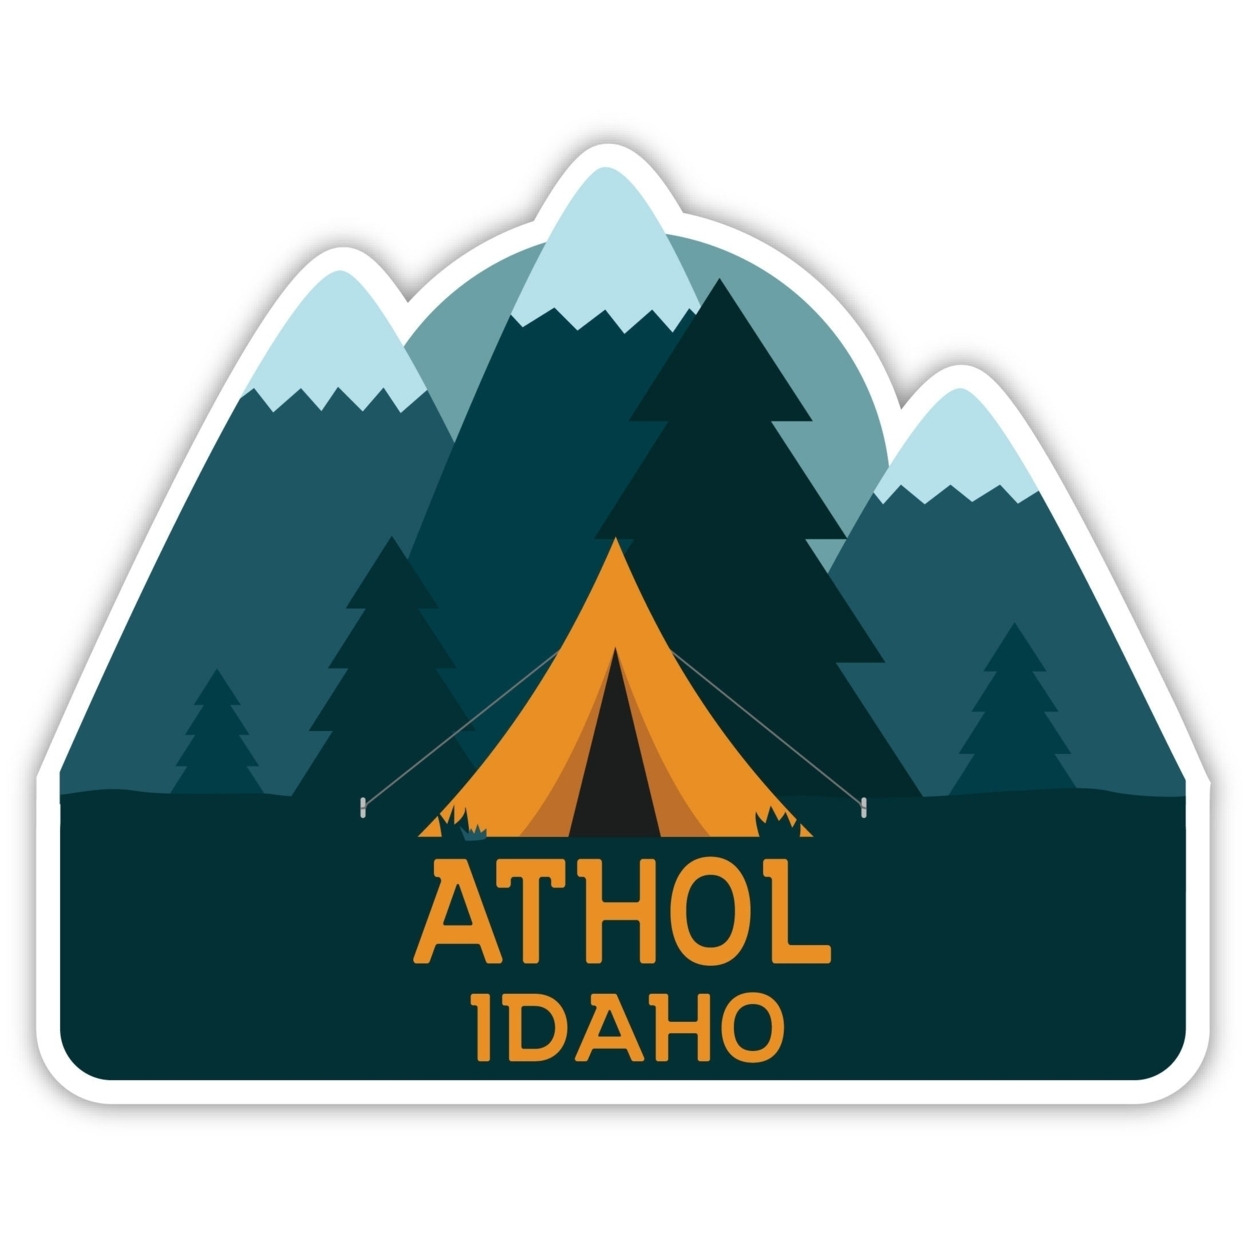 Athol Idaho Souvenir Decorative Stickers (Choose Theme And Size) - Single Unit, 4-Inch, Tent